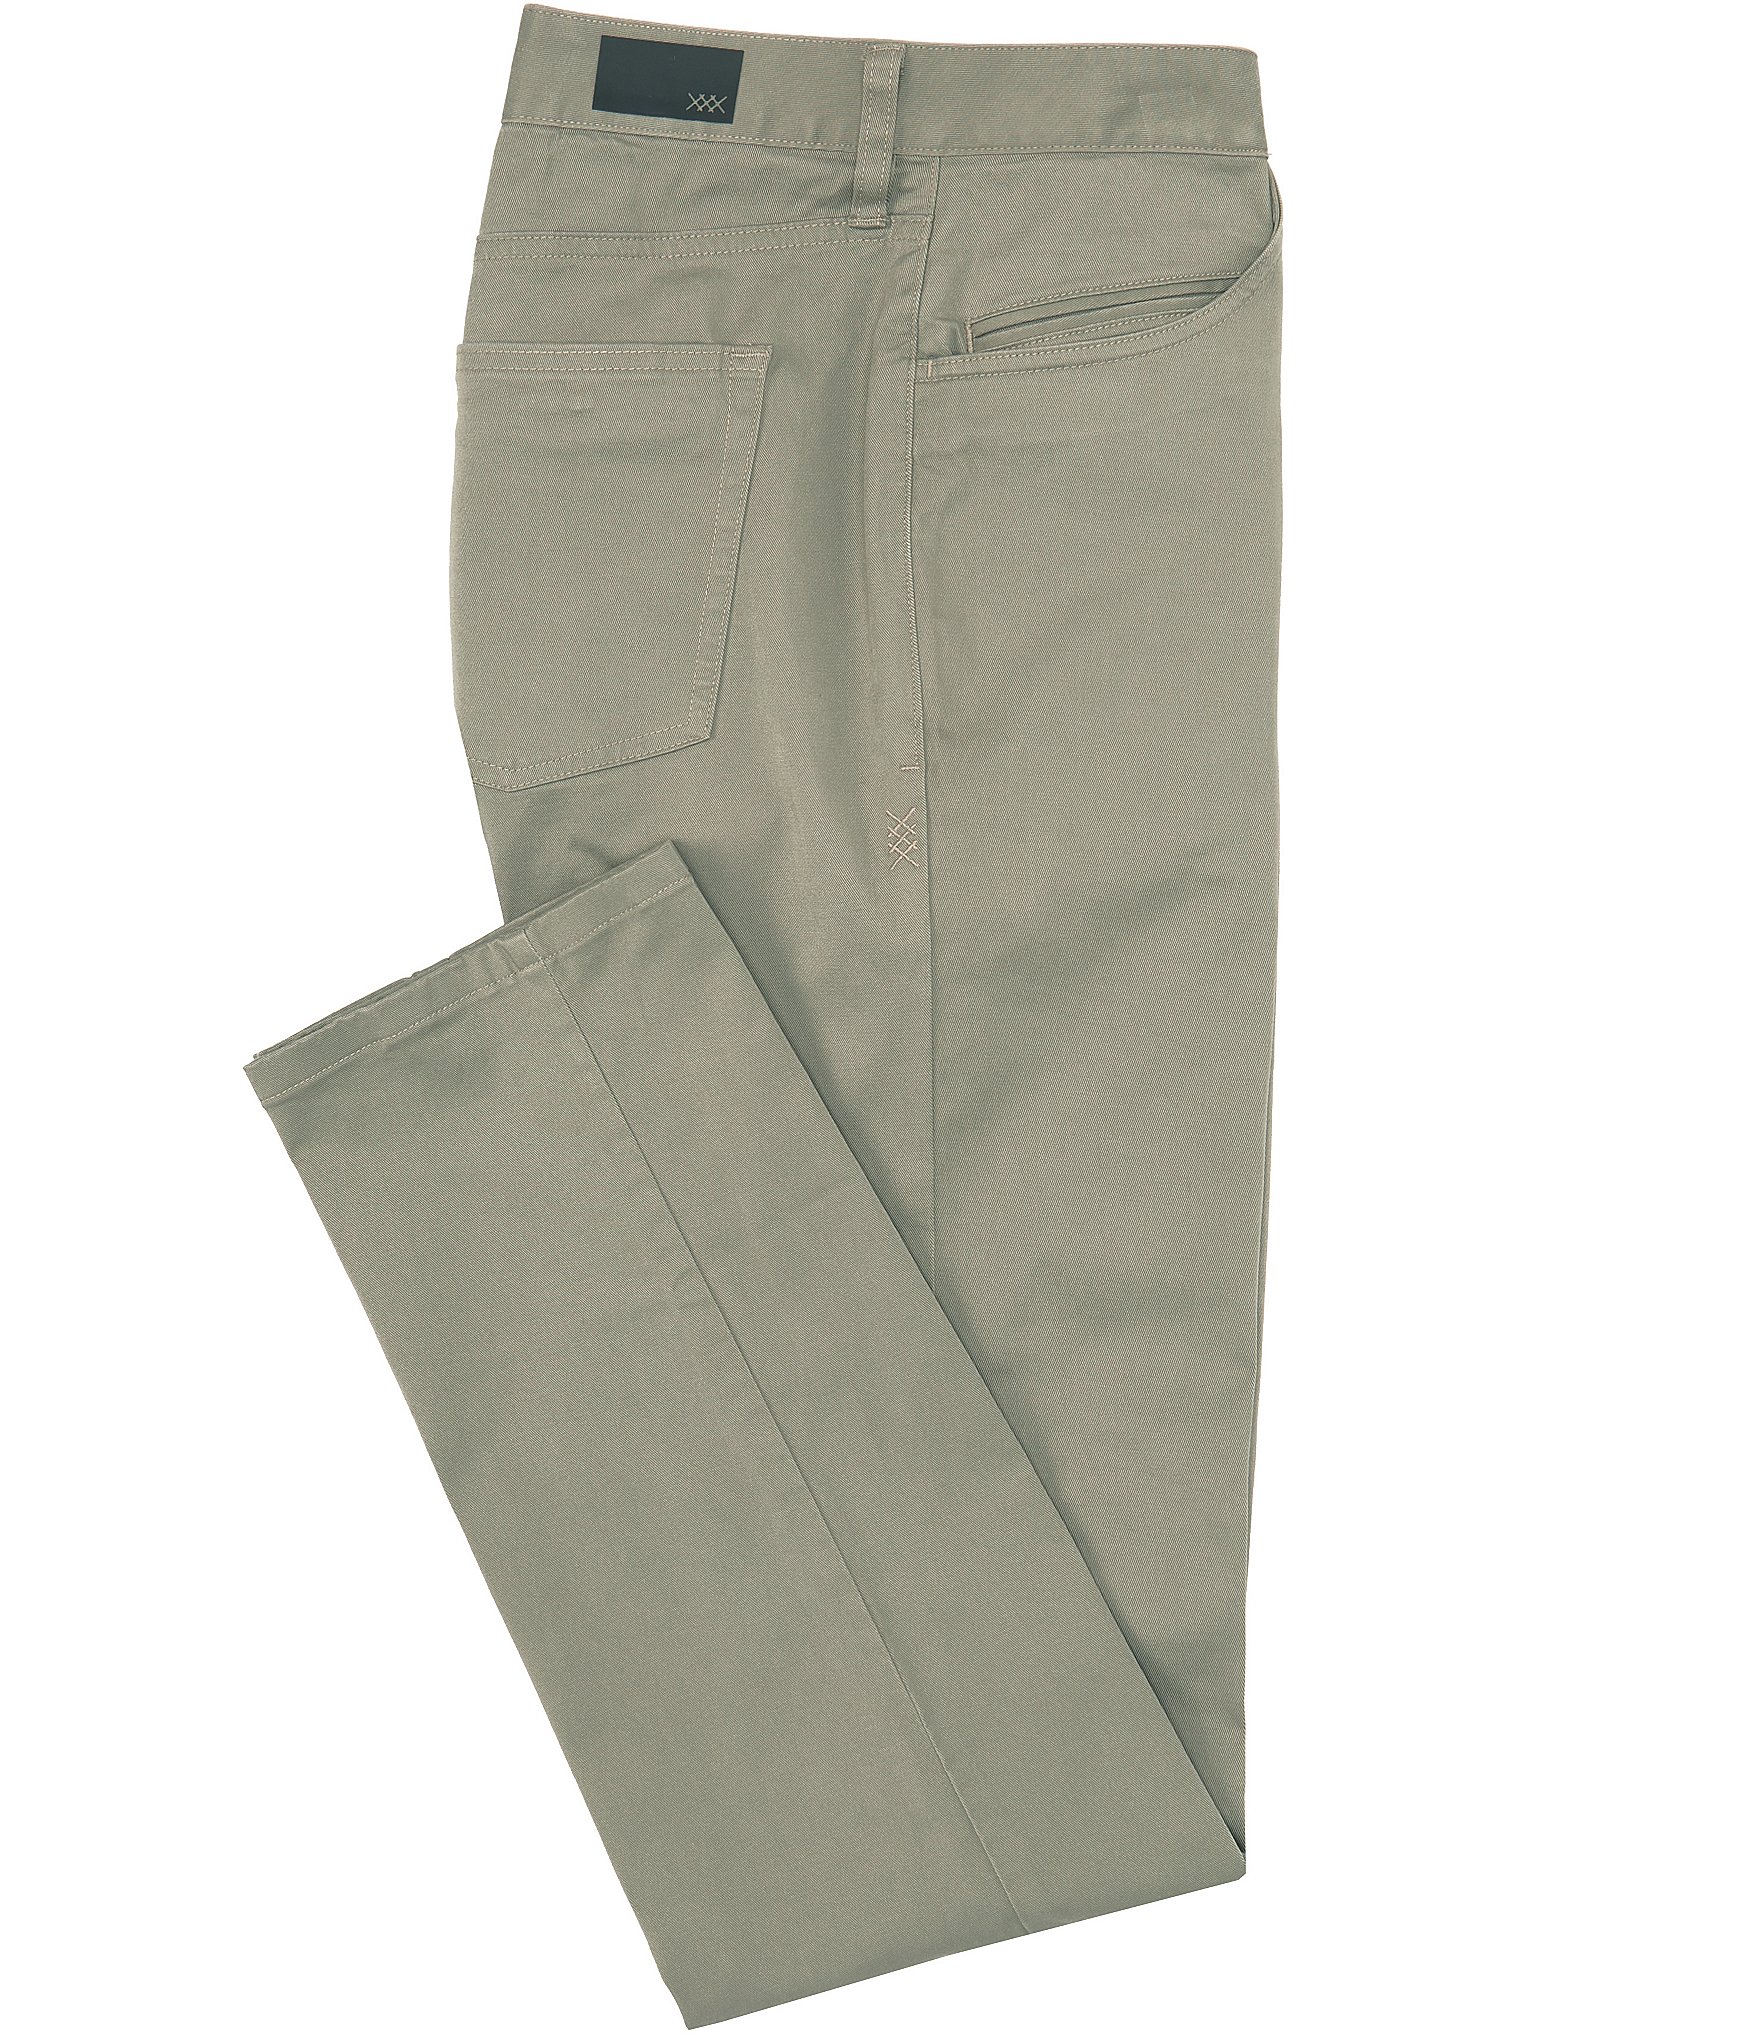 5 Pocket/Jean Men's Casual Pants